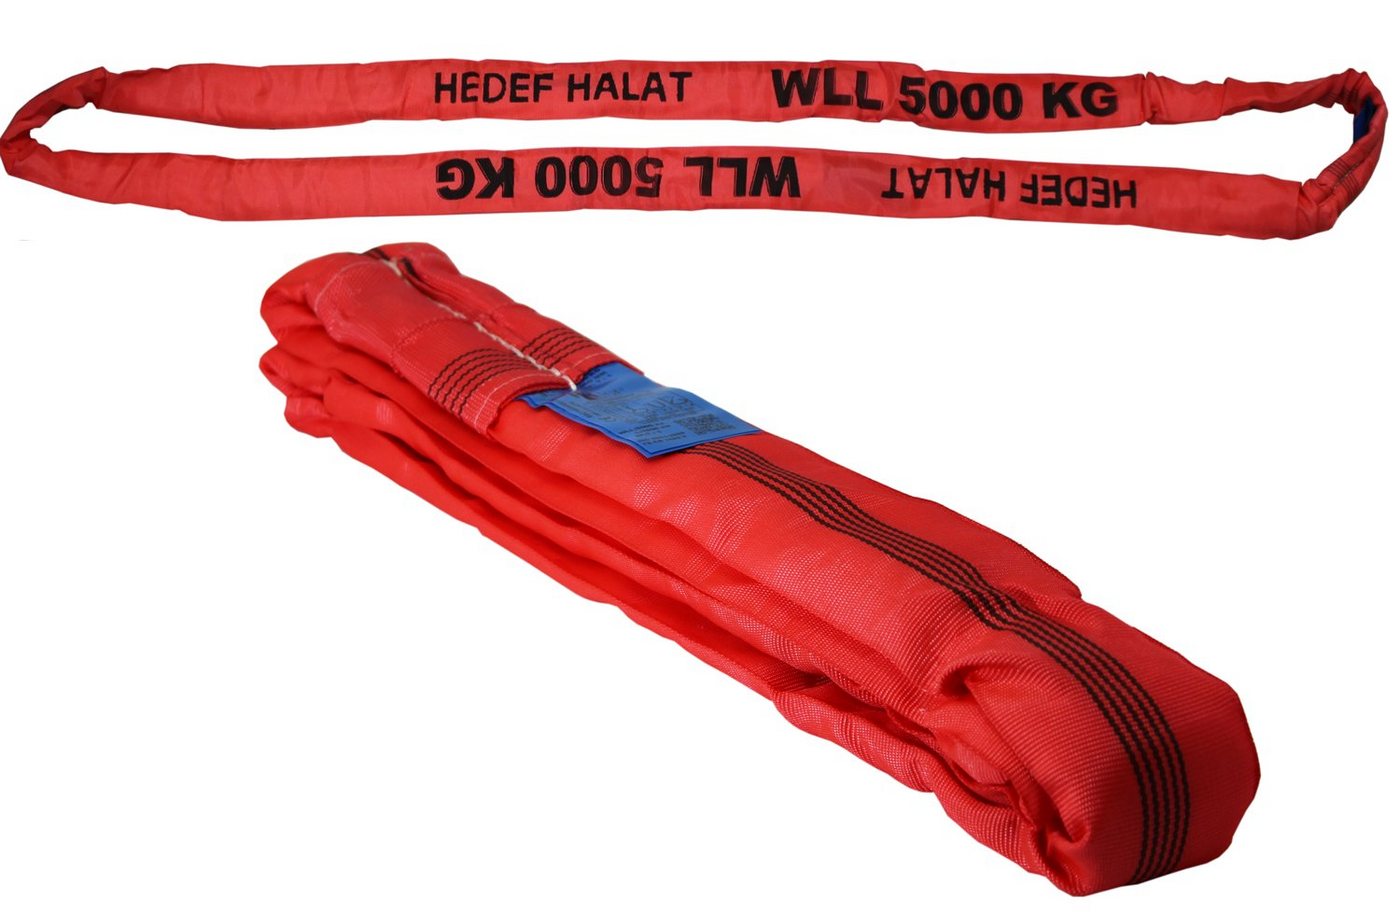 HEDEF HALAT Rundschlinge mit Einfachmantel 5 Tonnen 6 Meter SF: 7/1 DIN EN 1492-2 Hebeband, Rundschlingen Bandschlinge Hebegurt 6 m (umfang 12 m) von HEDEF HALAT